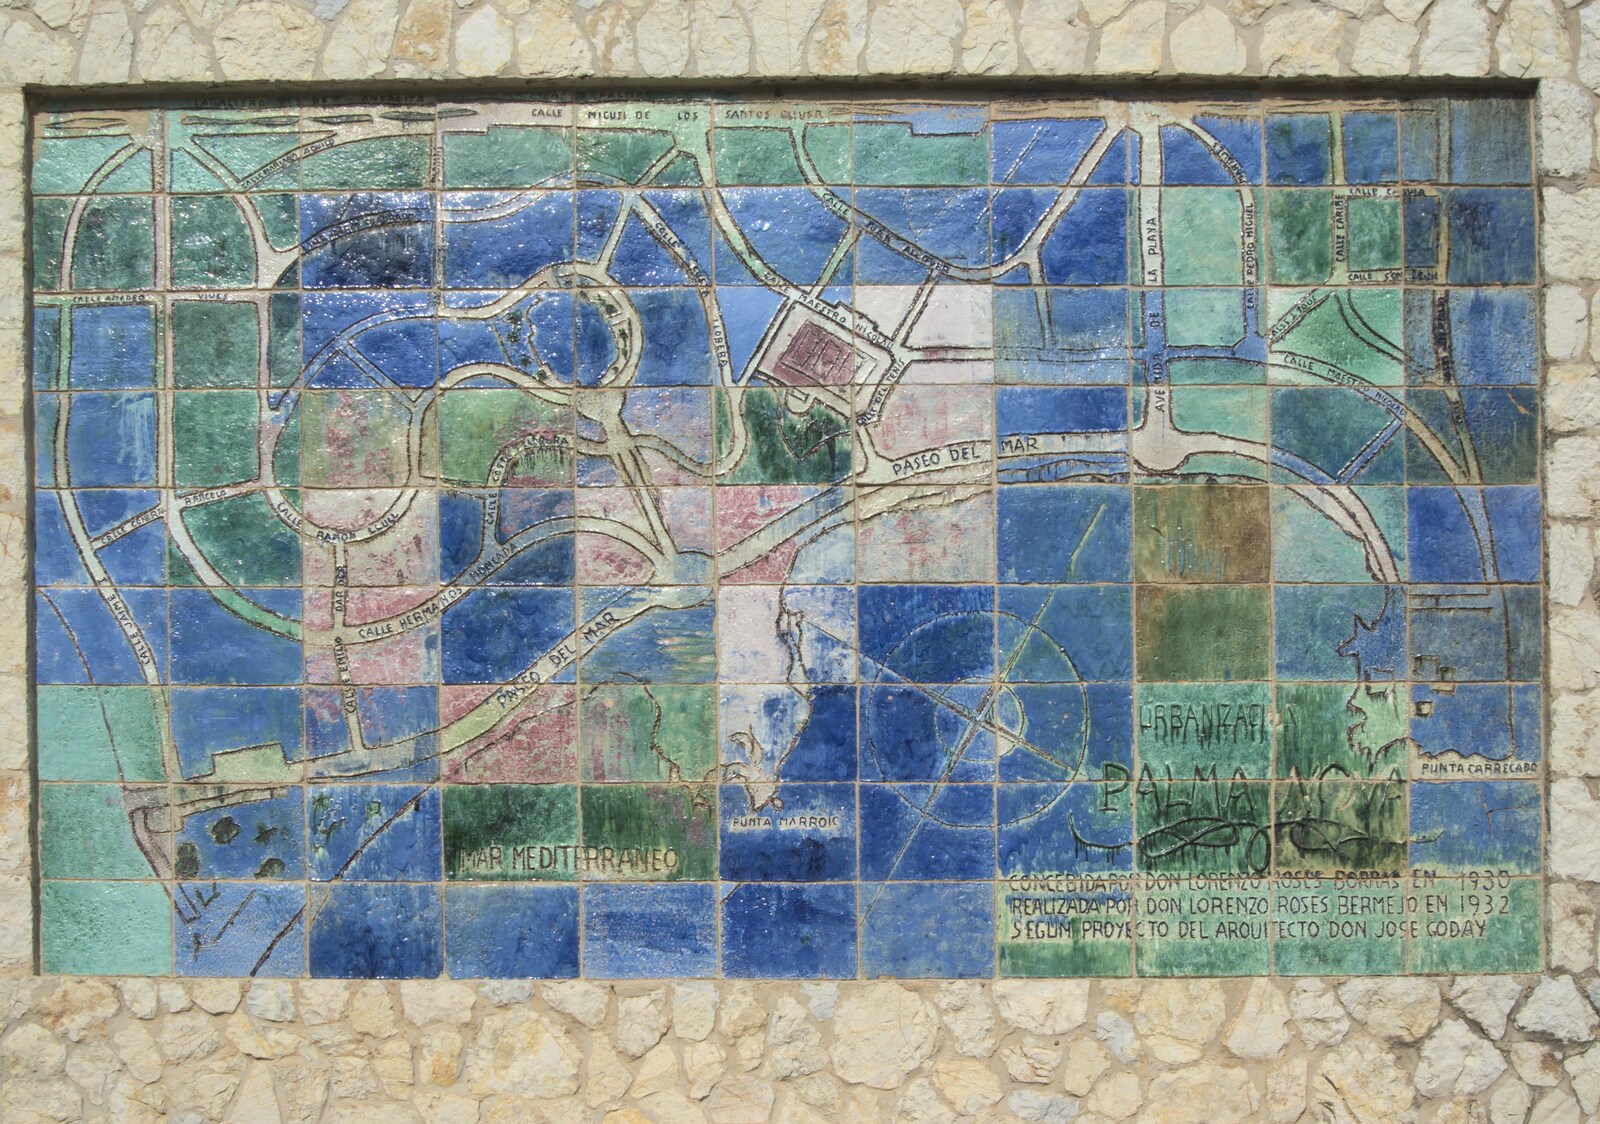 A tiled map of Palmanova from A Postcard From Palmanova, Mallorca, Spain - 21st September 2009